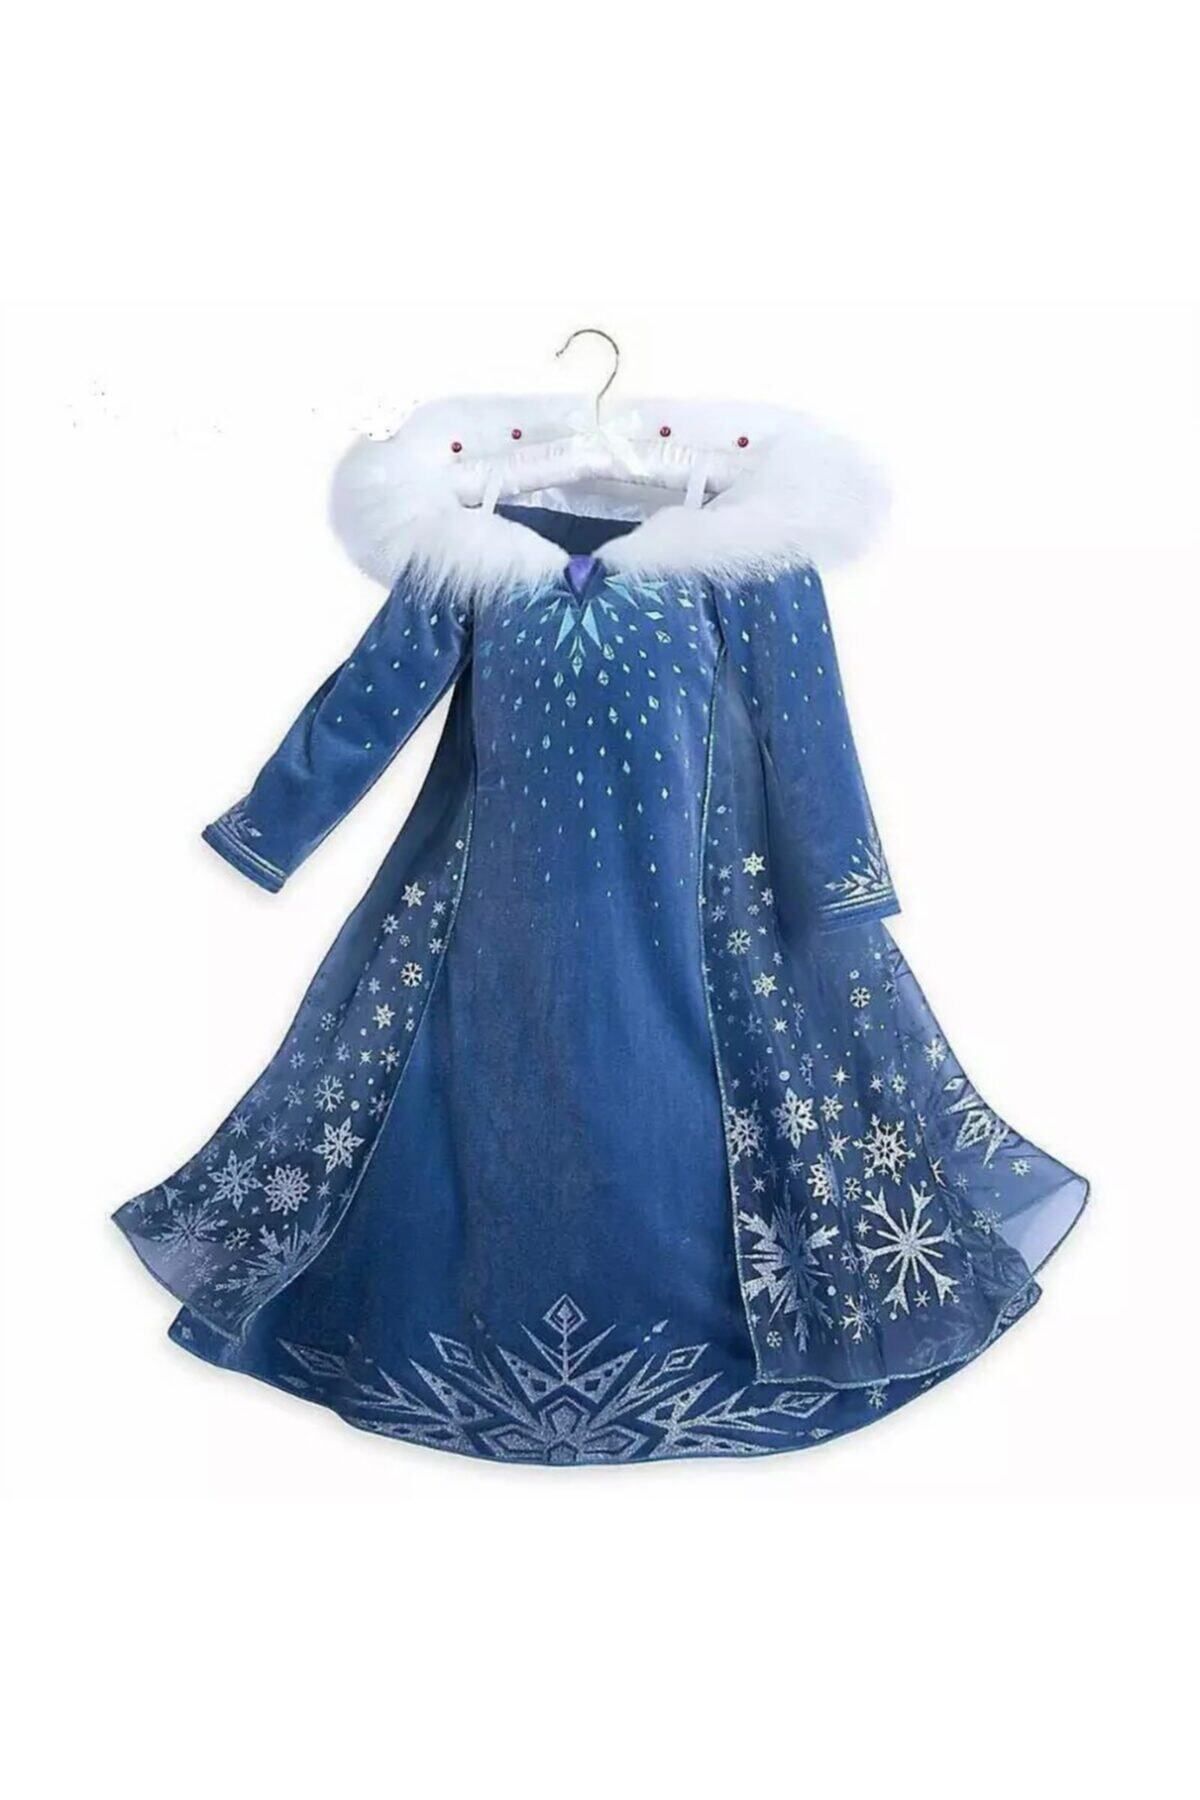 INU Kız Çocuk Doğum Günü Konsepti Lacivert Kürklü Elsa Kostüm